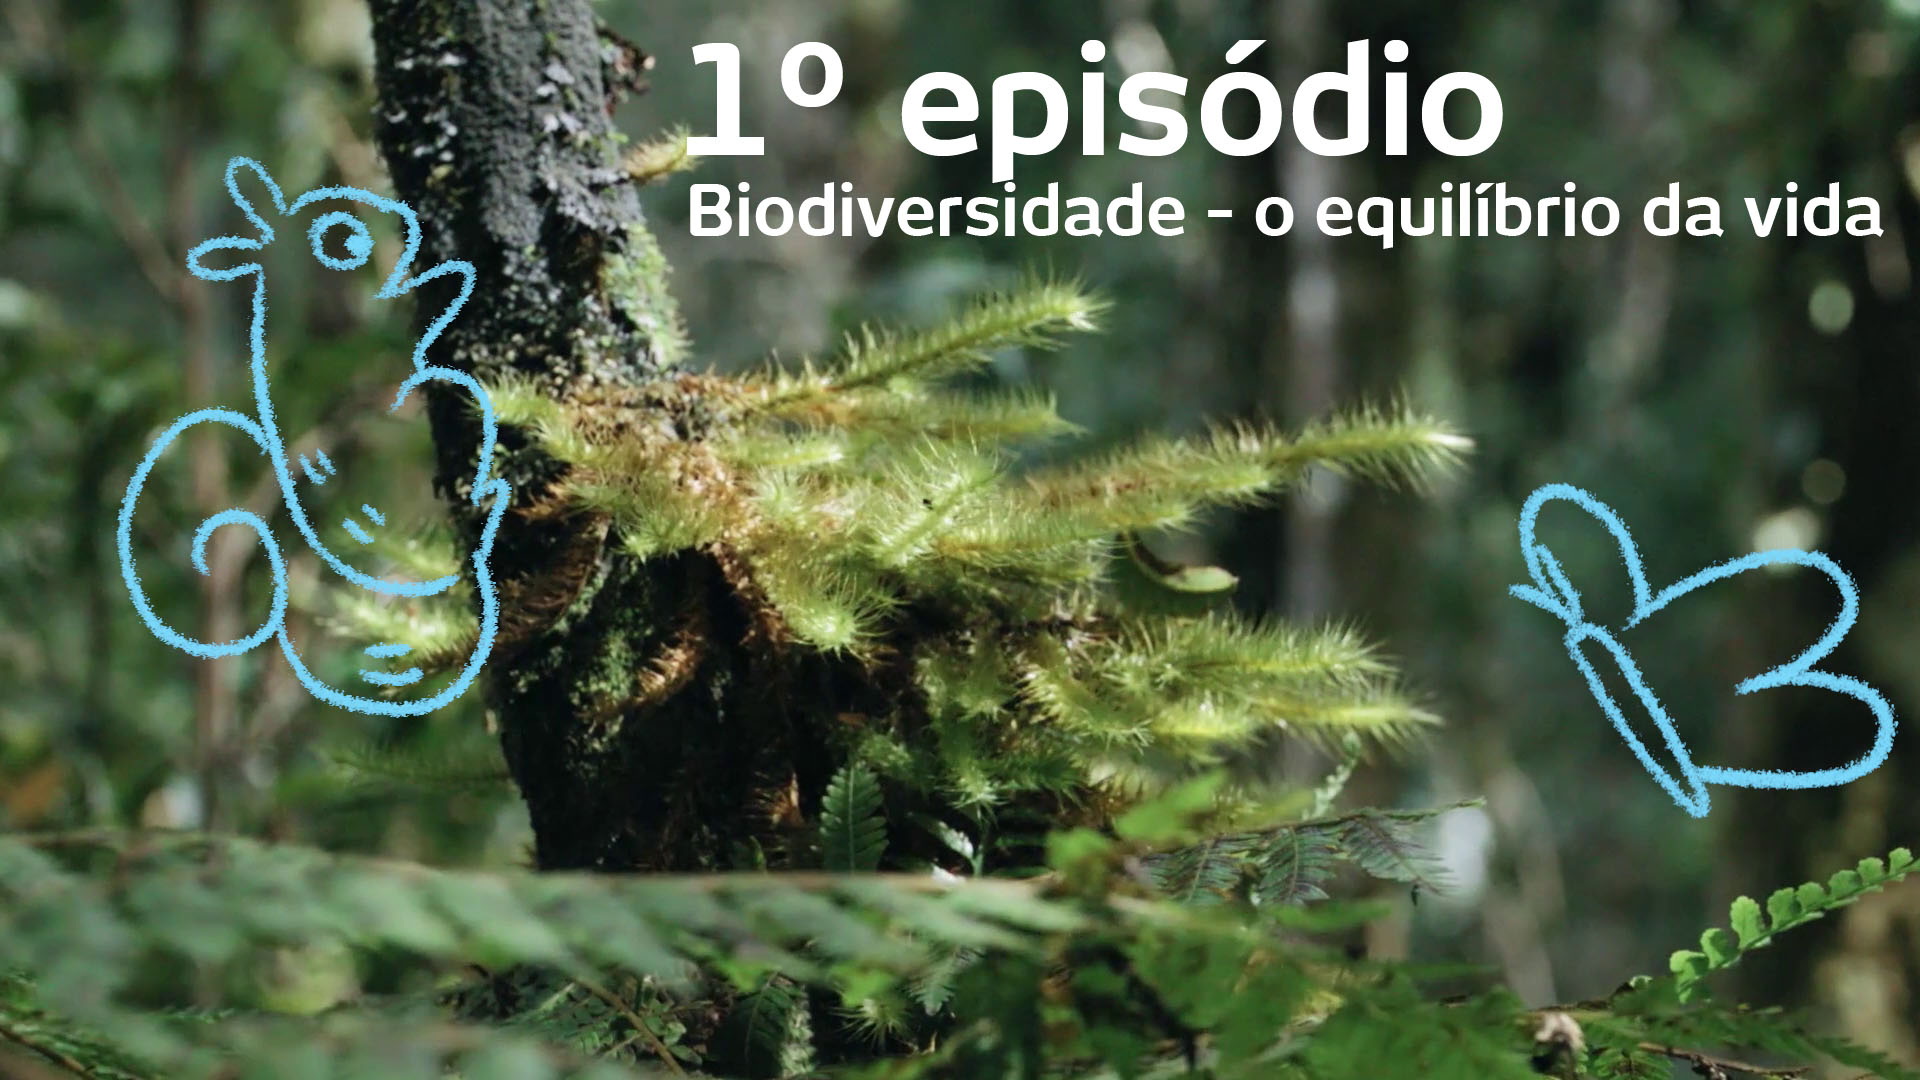 Episode 1 - Biodiversity– the balance of life on Earth